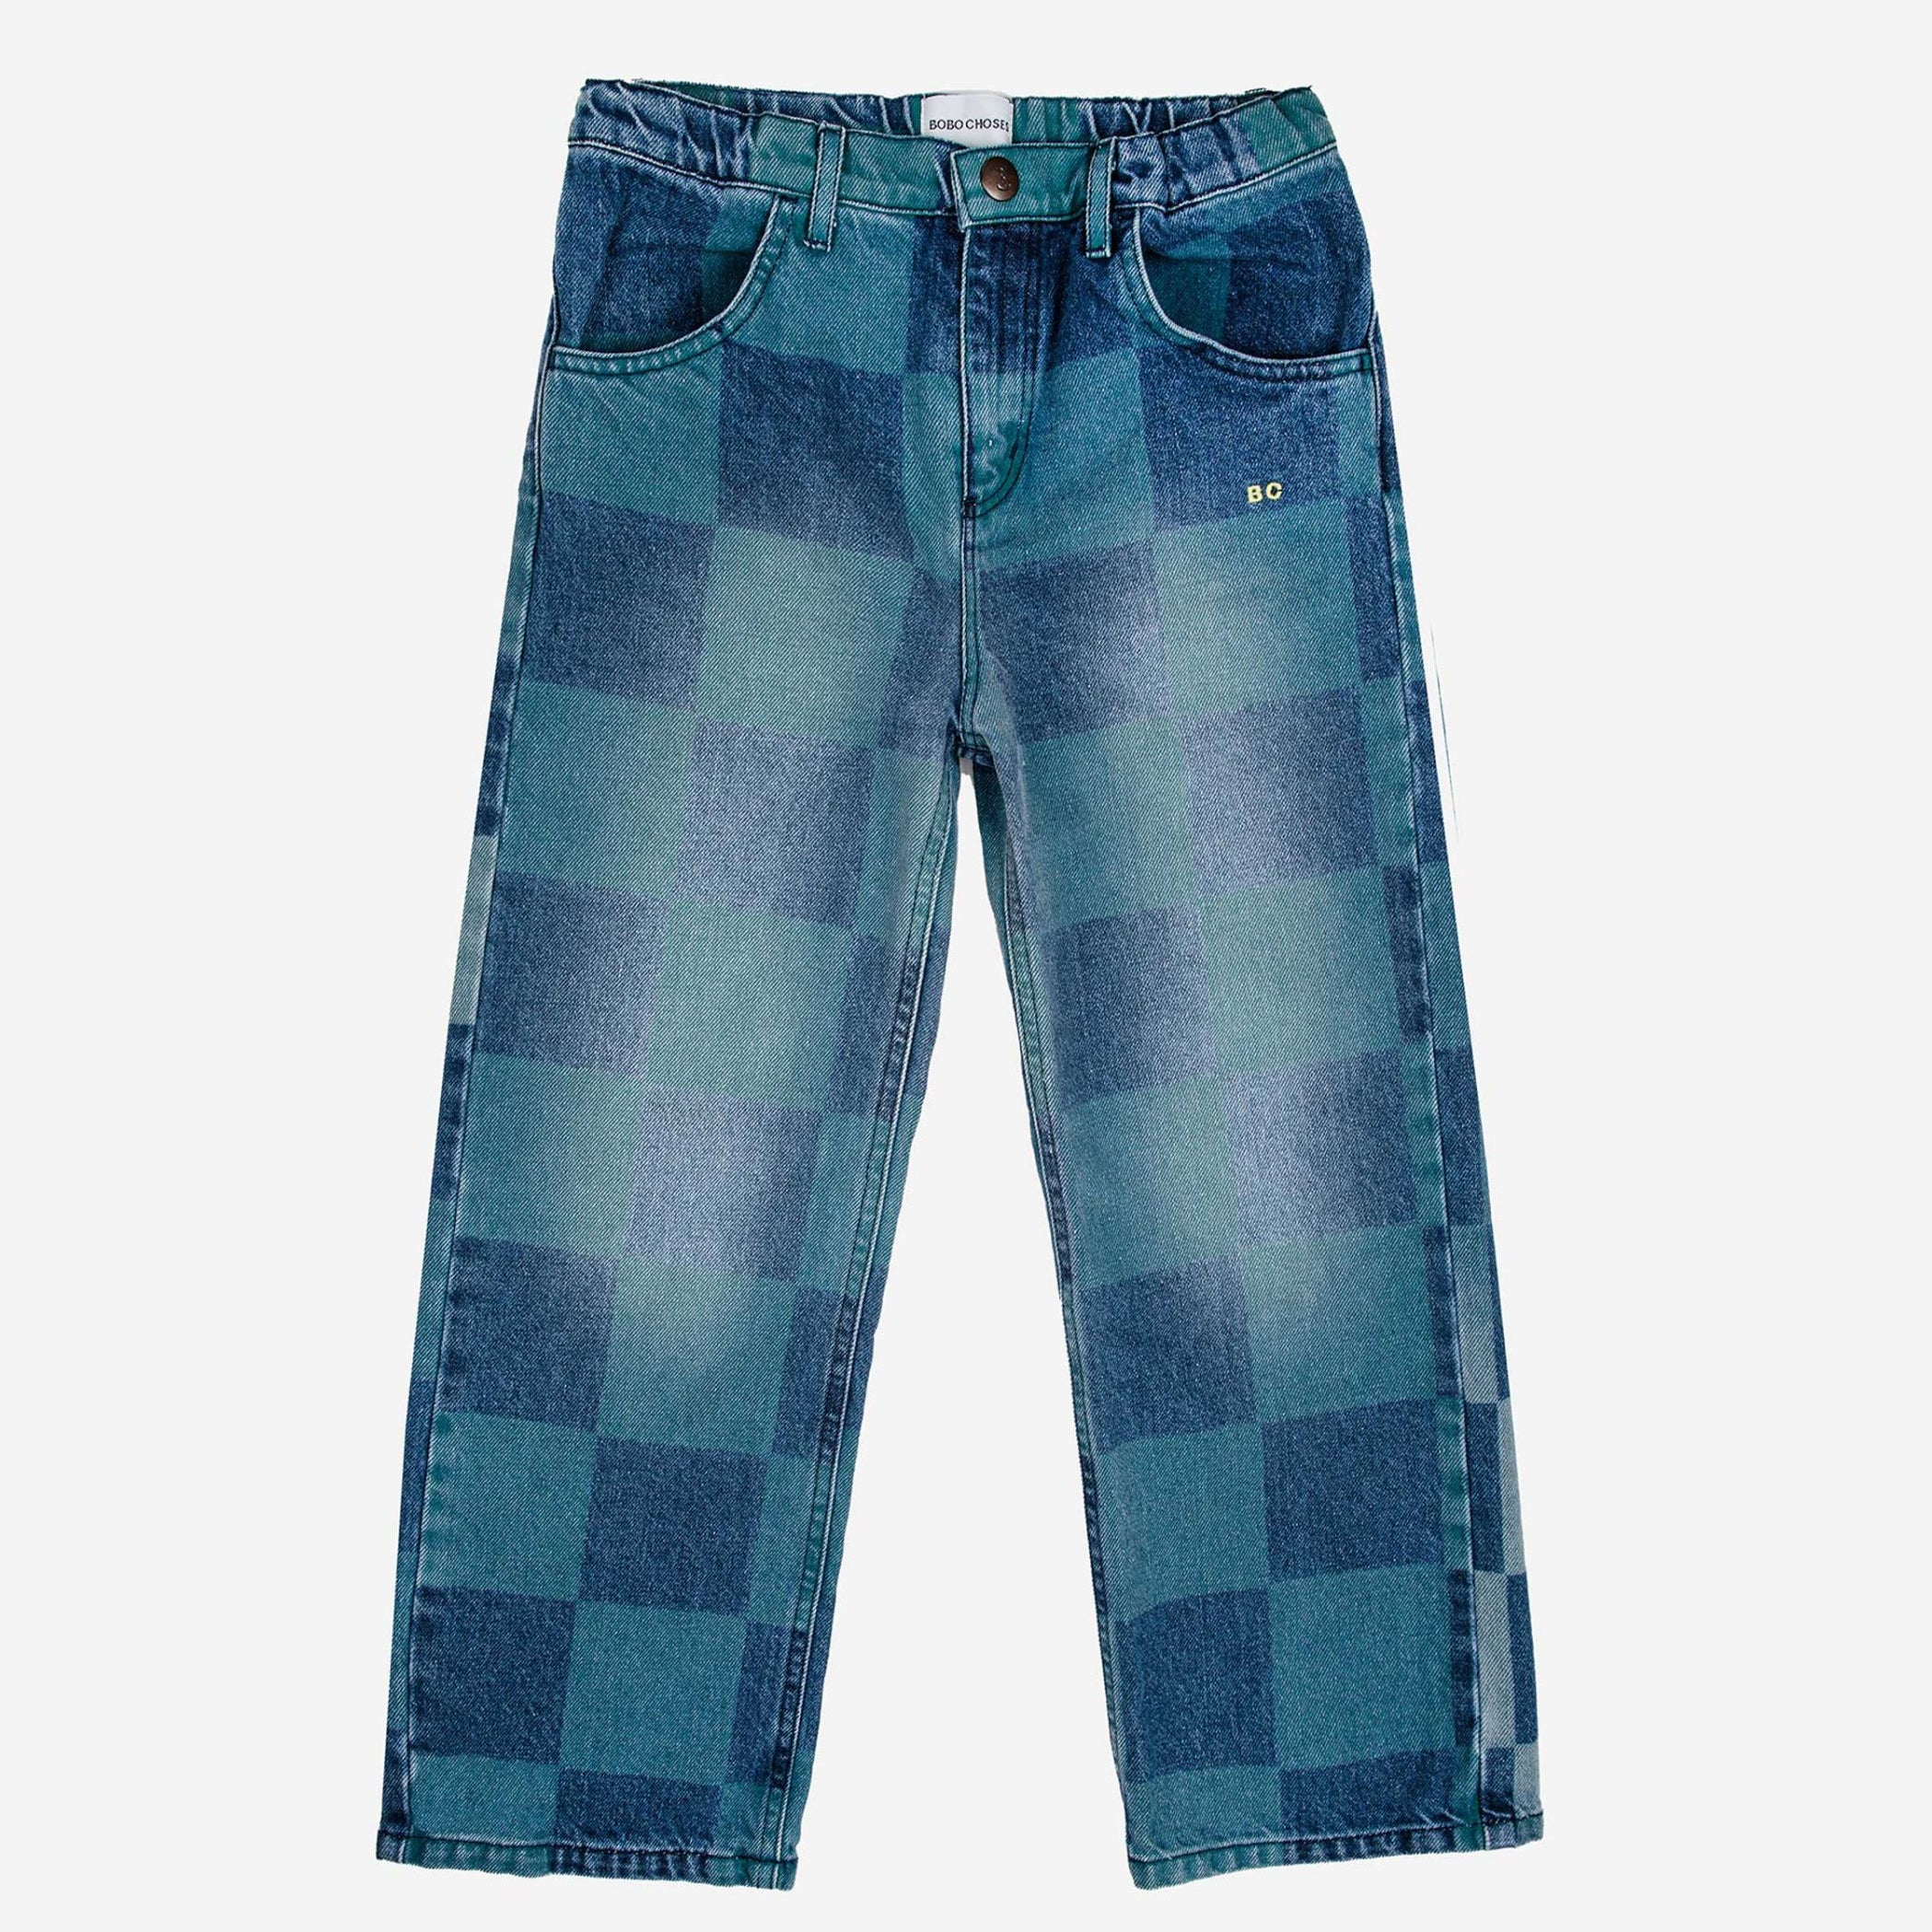 Checkerboard denim pants